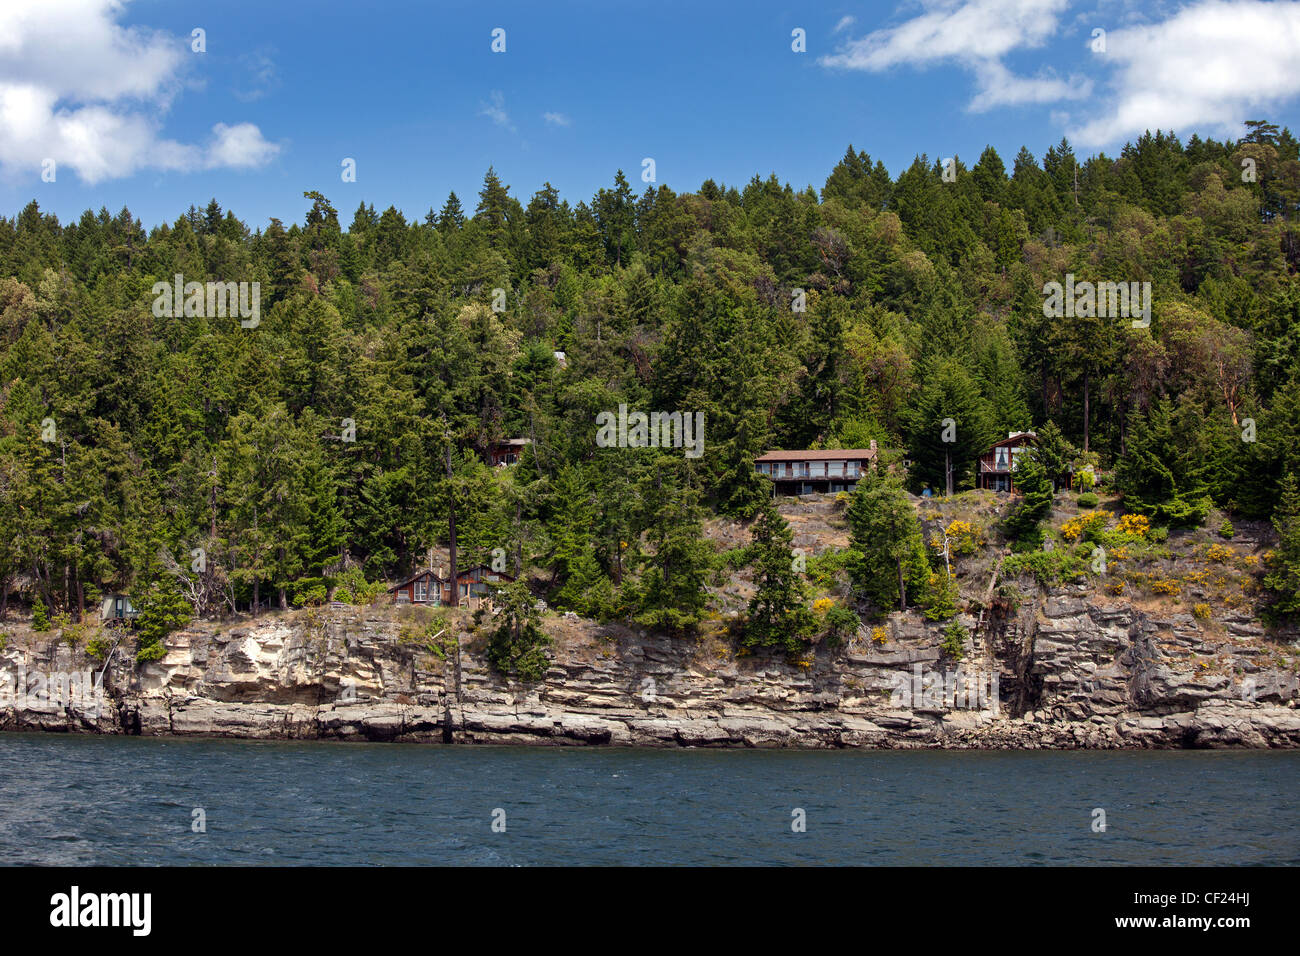 Gabriola Island - Rocky shore with cabins Stock Photo